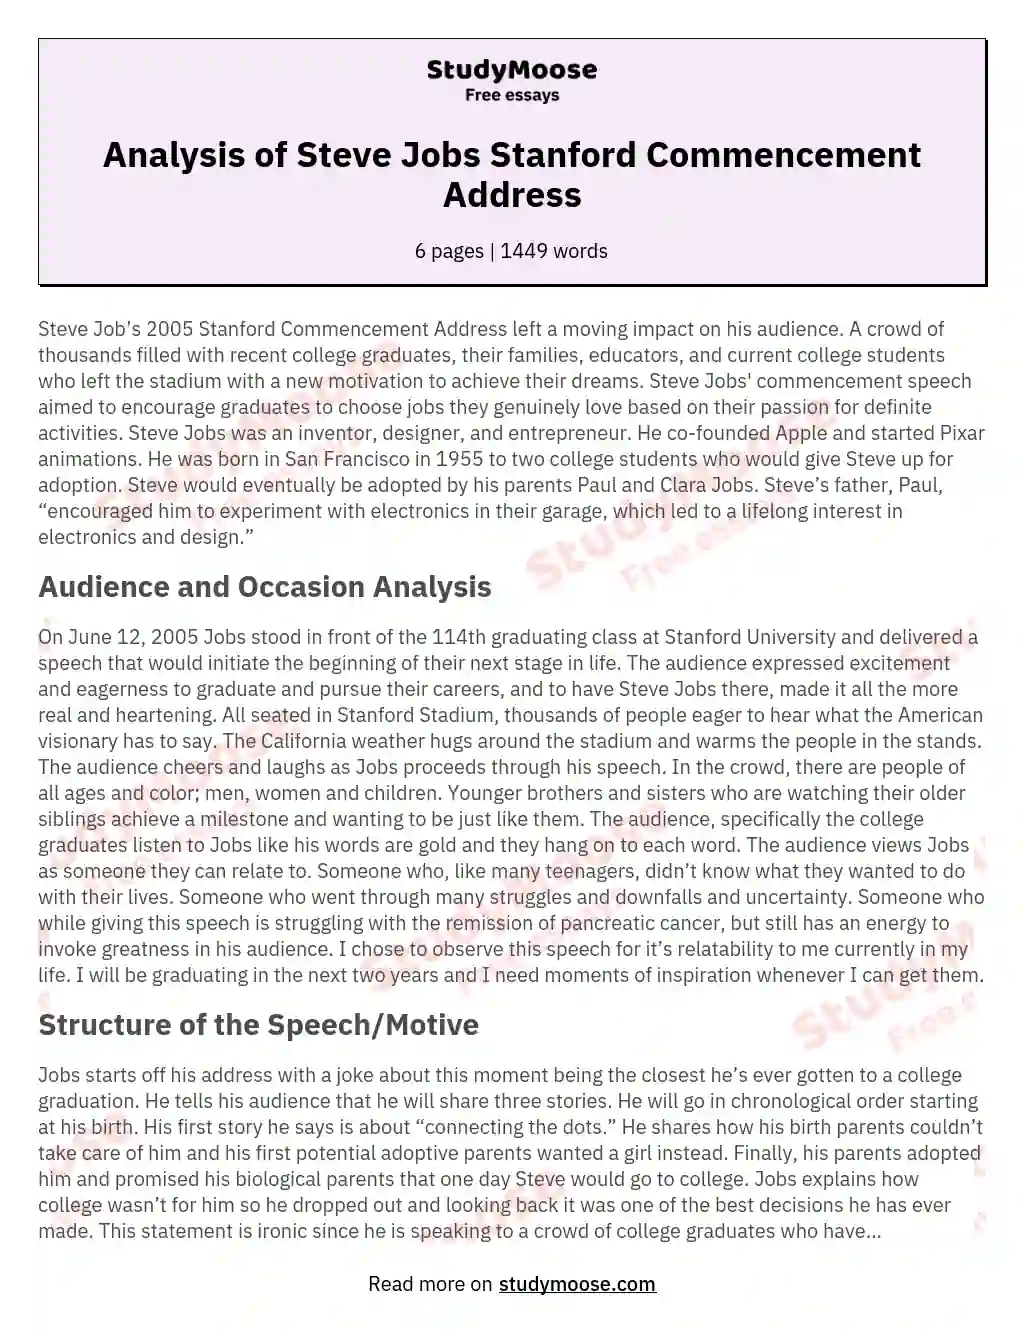 Analysis of Steve Jobs Stanford Commencement Address